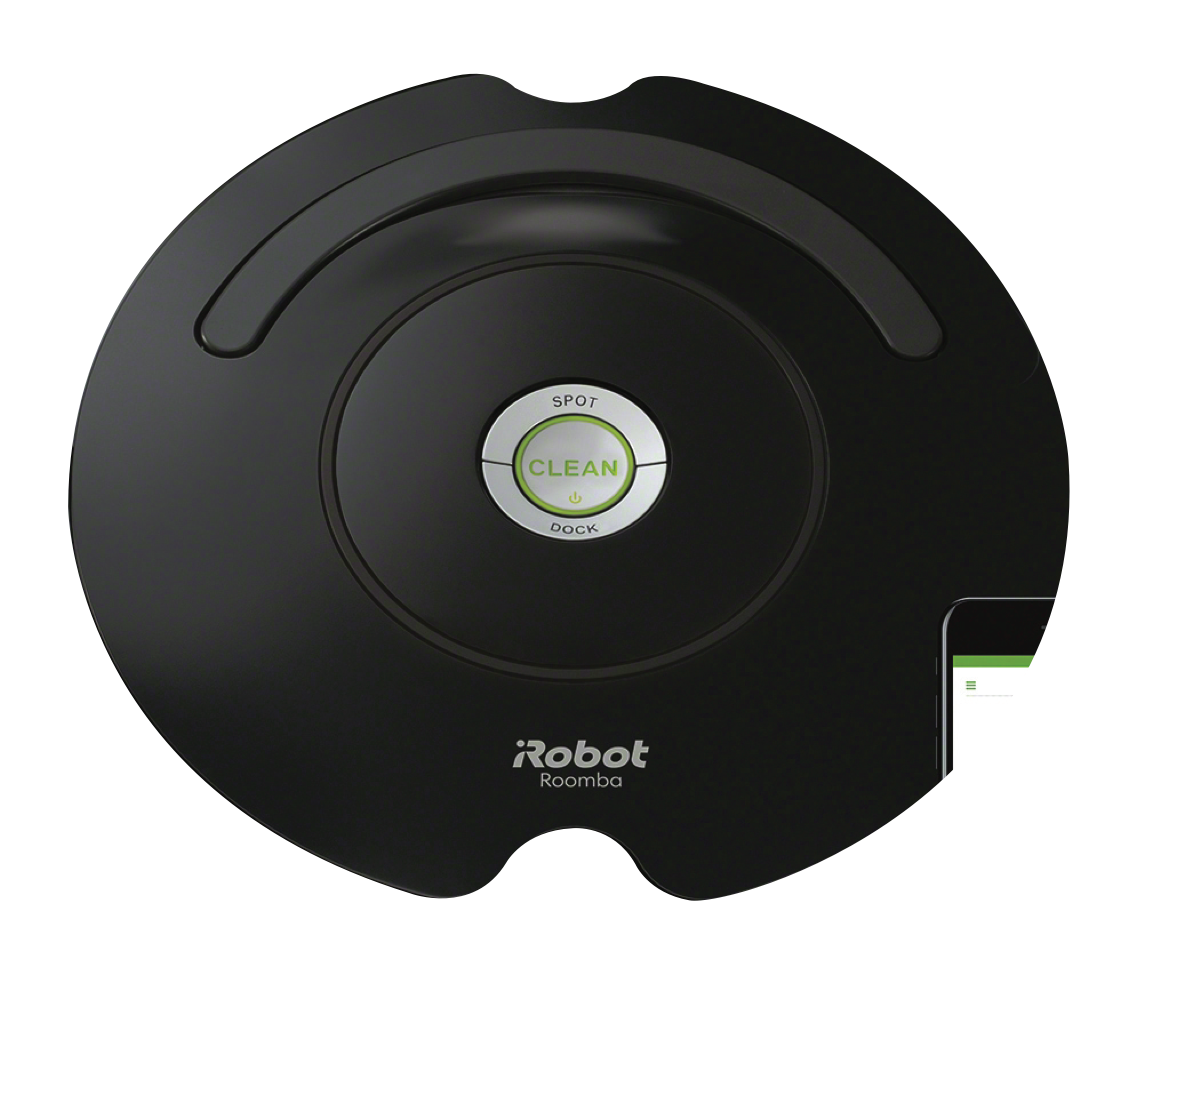 iRobot R670 Roomba Robotic Vacuum Remote Control at The ...